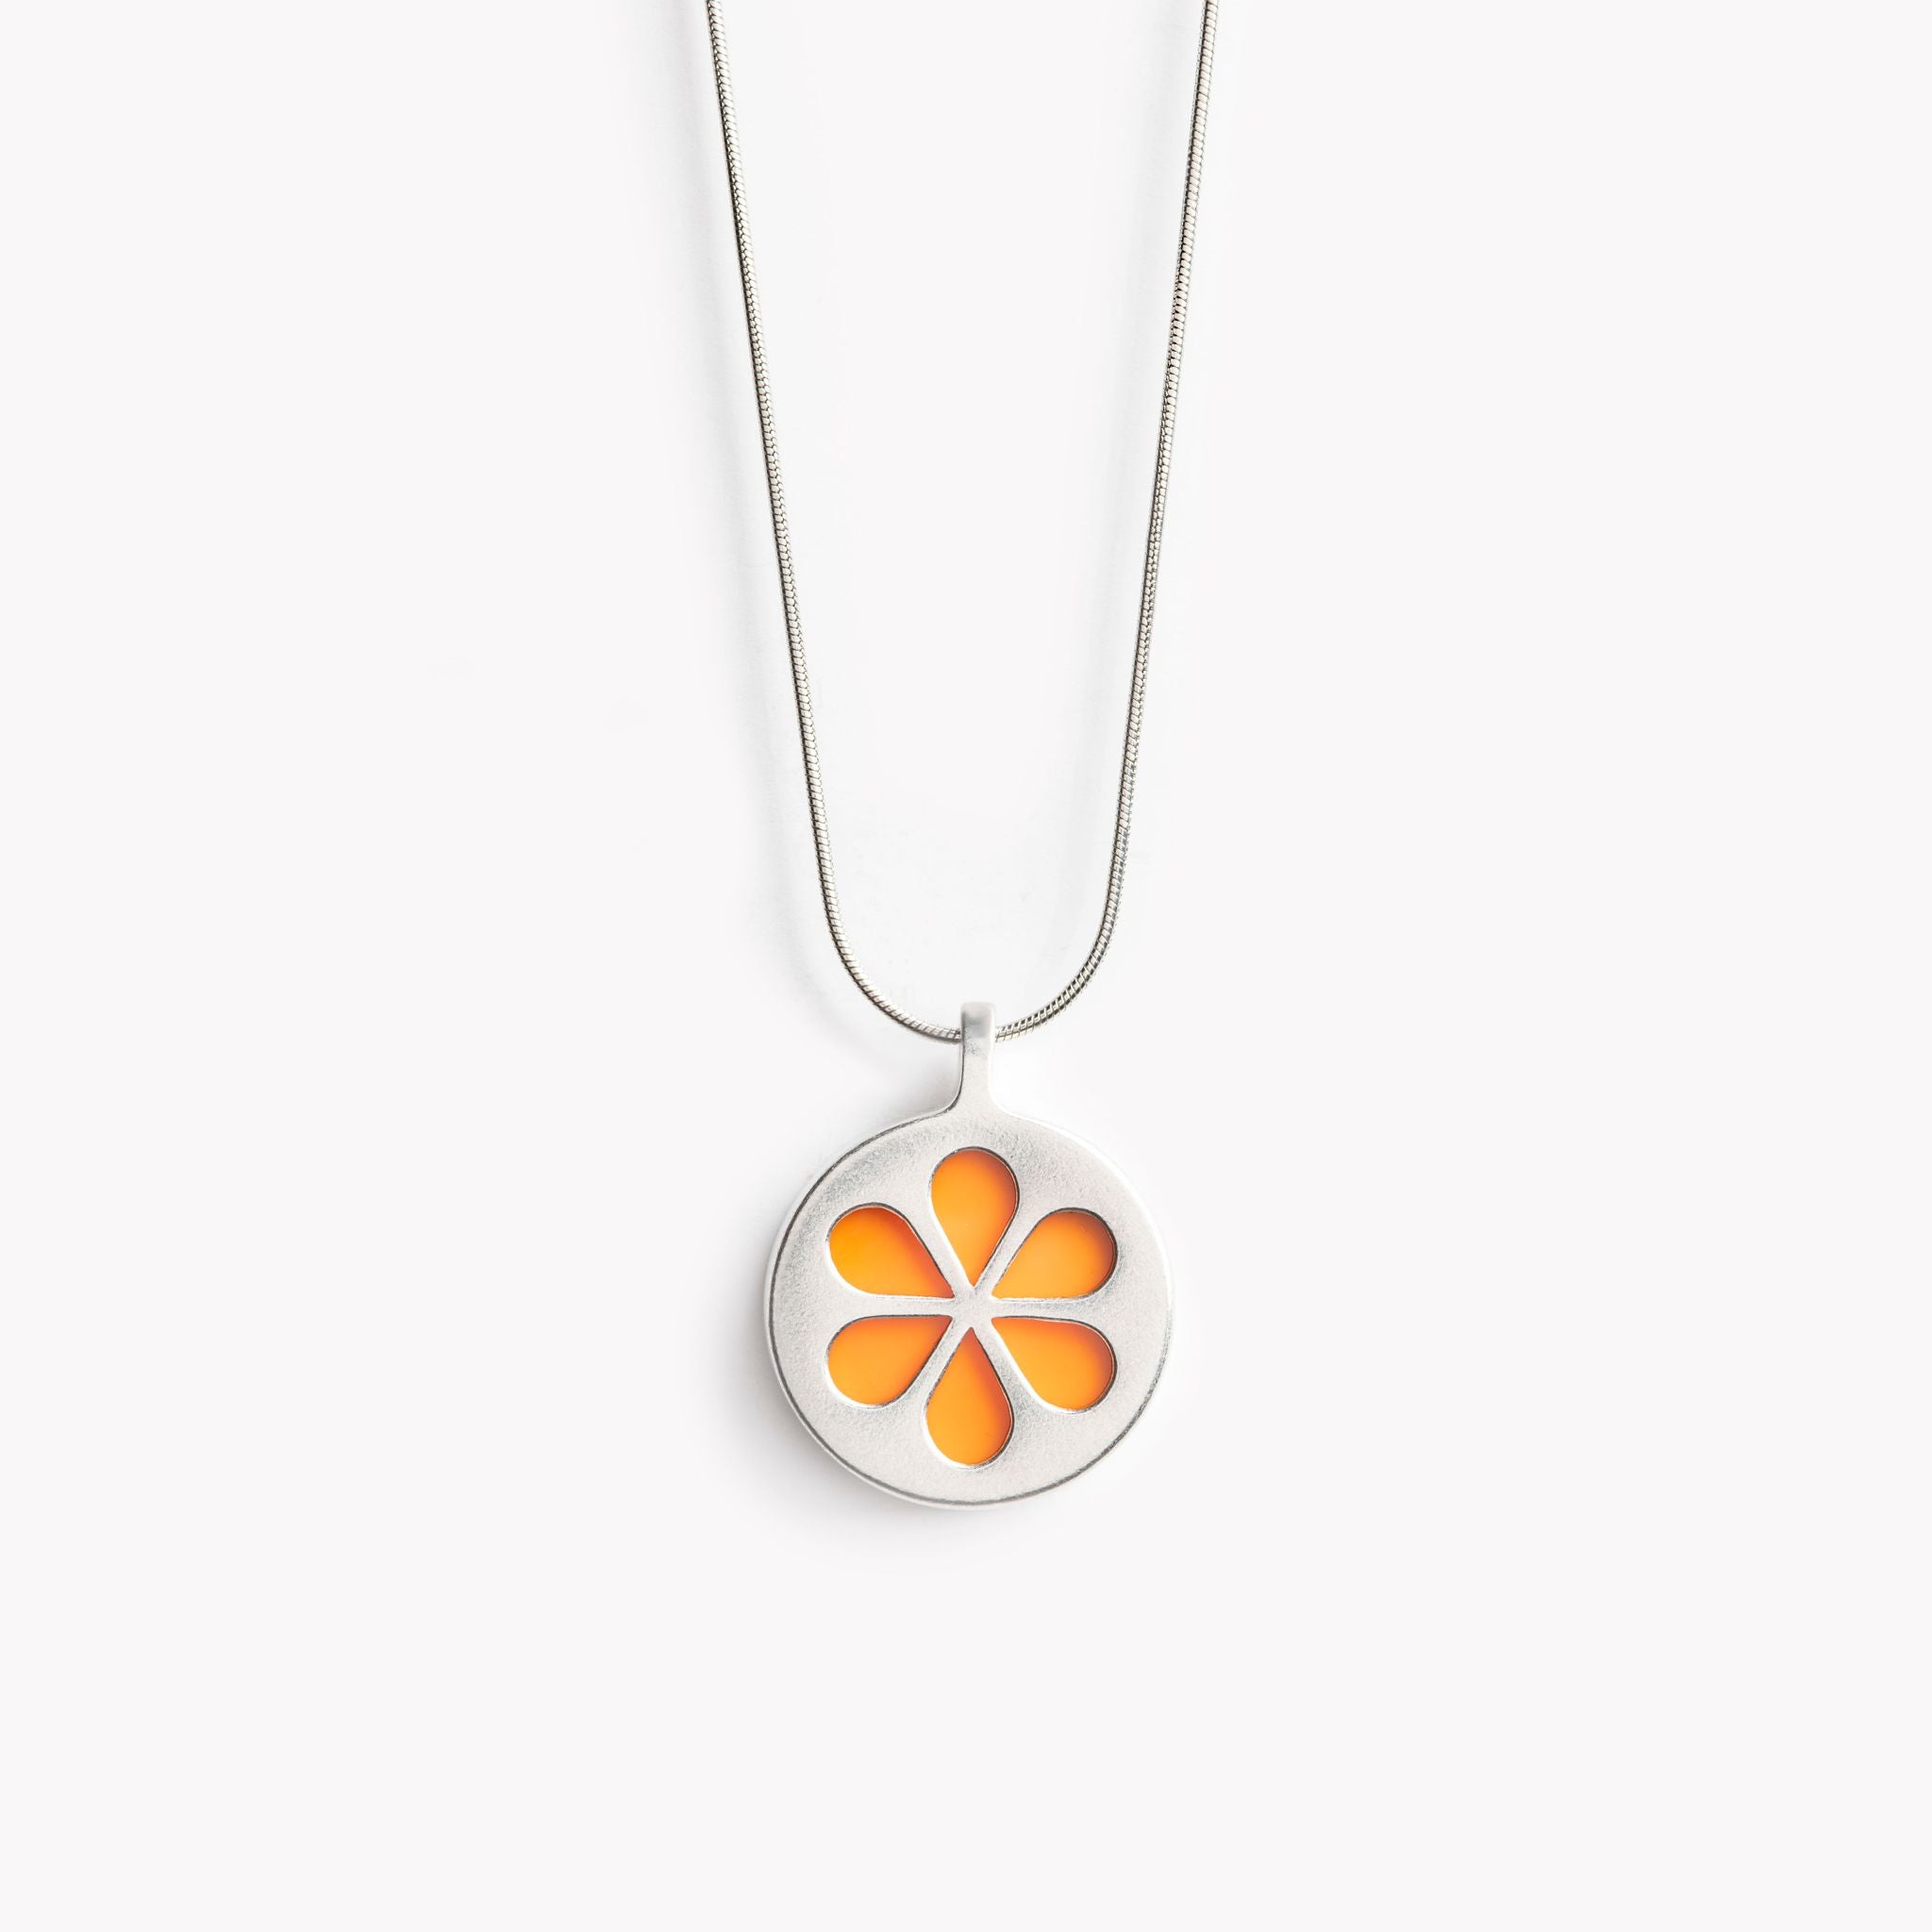 A simple circular pendant necklace with a bright orange flower petal design.